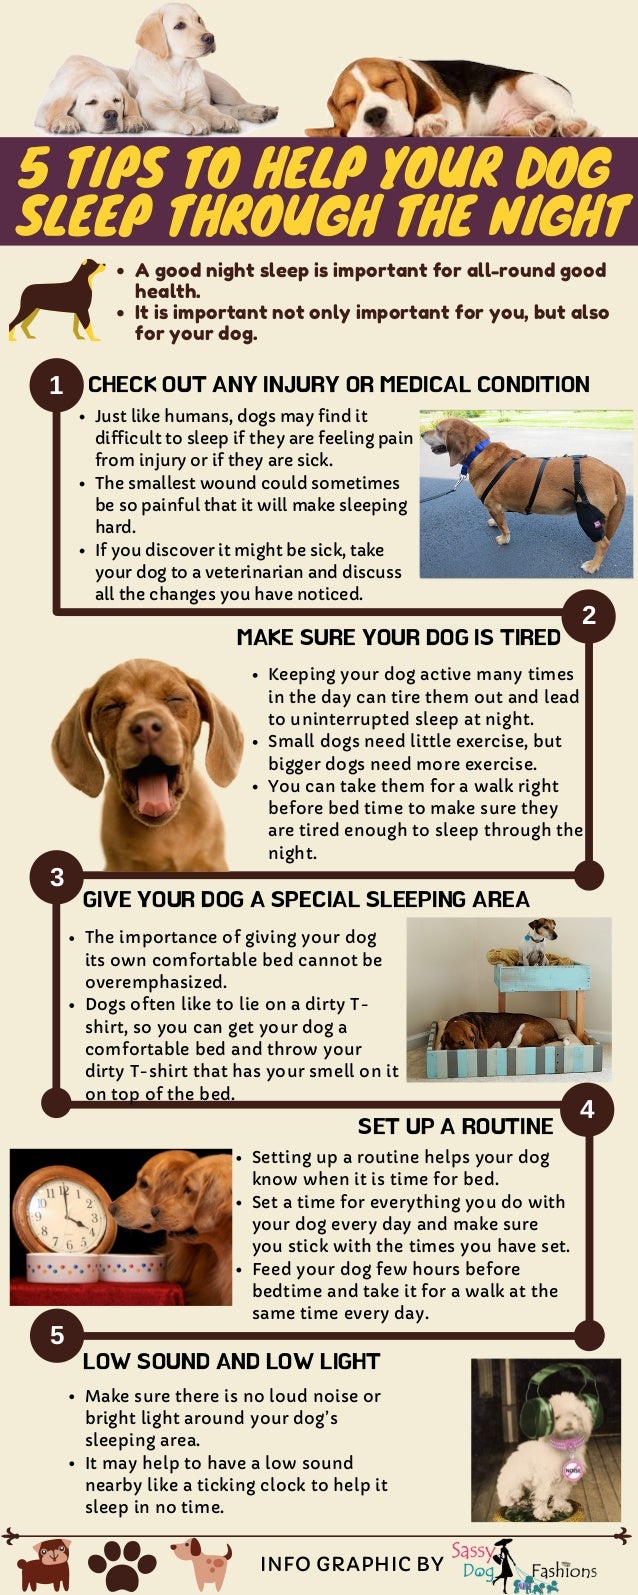 5 TIPS TO HELP YOUR DOG SLEEP THROUGH 